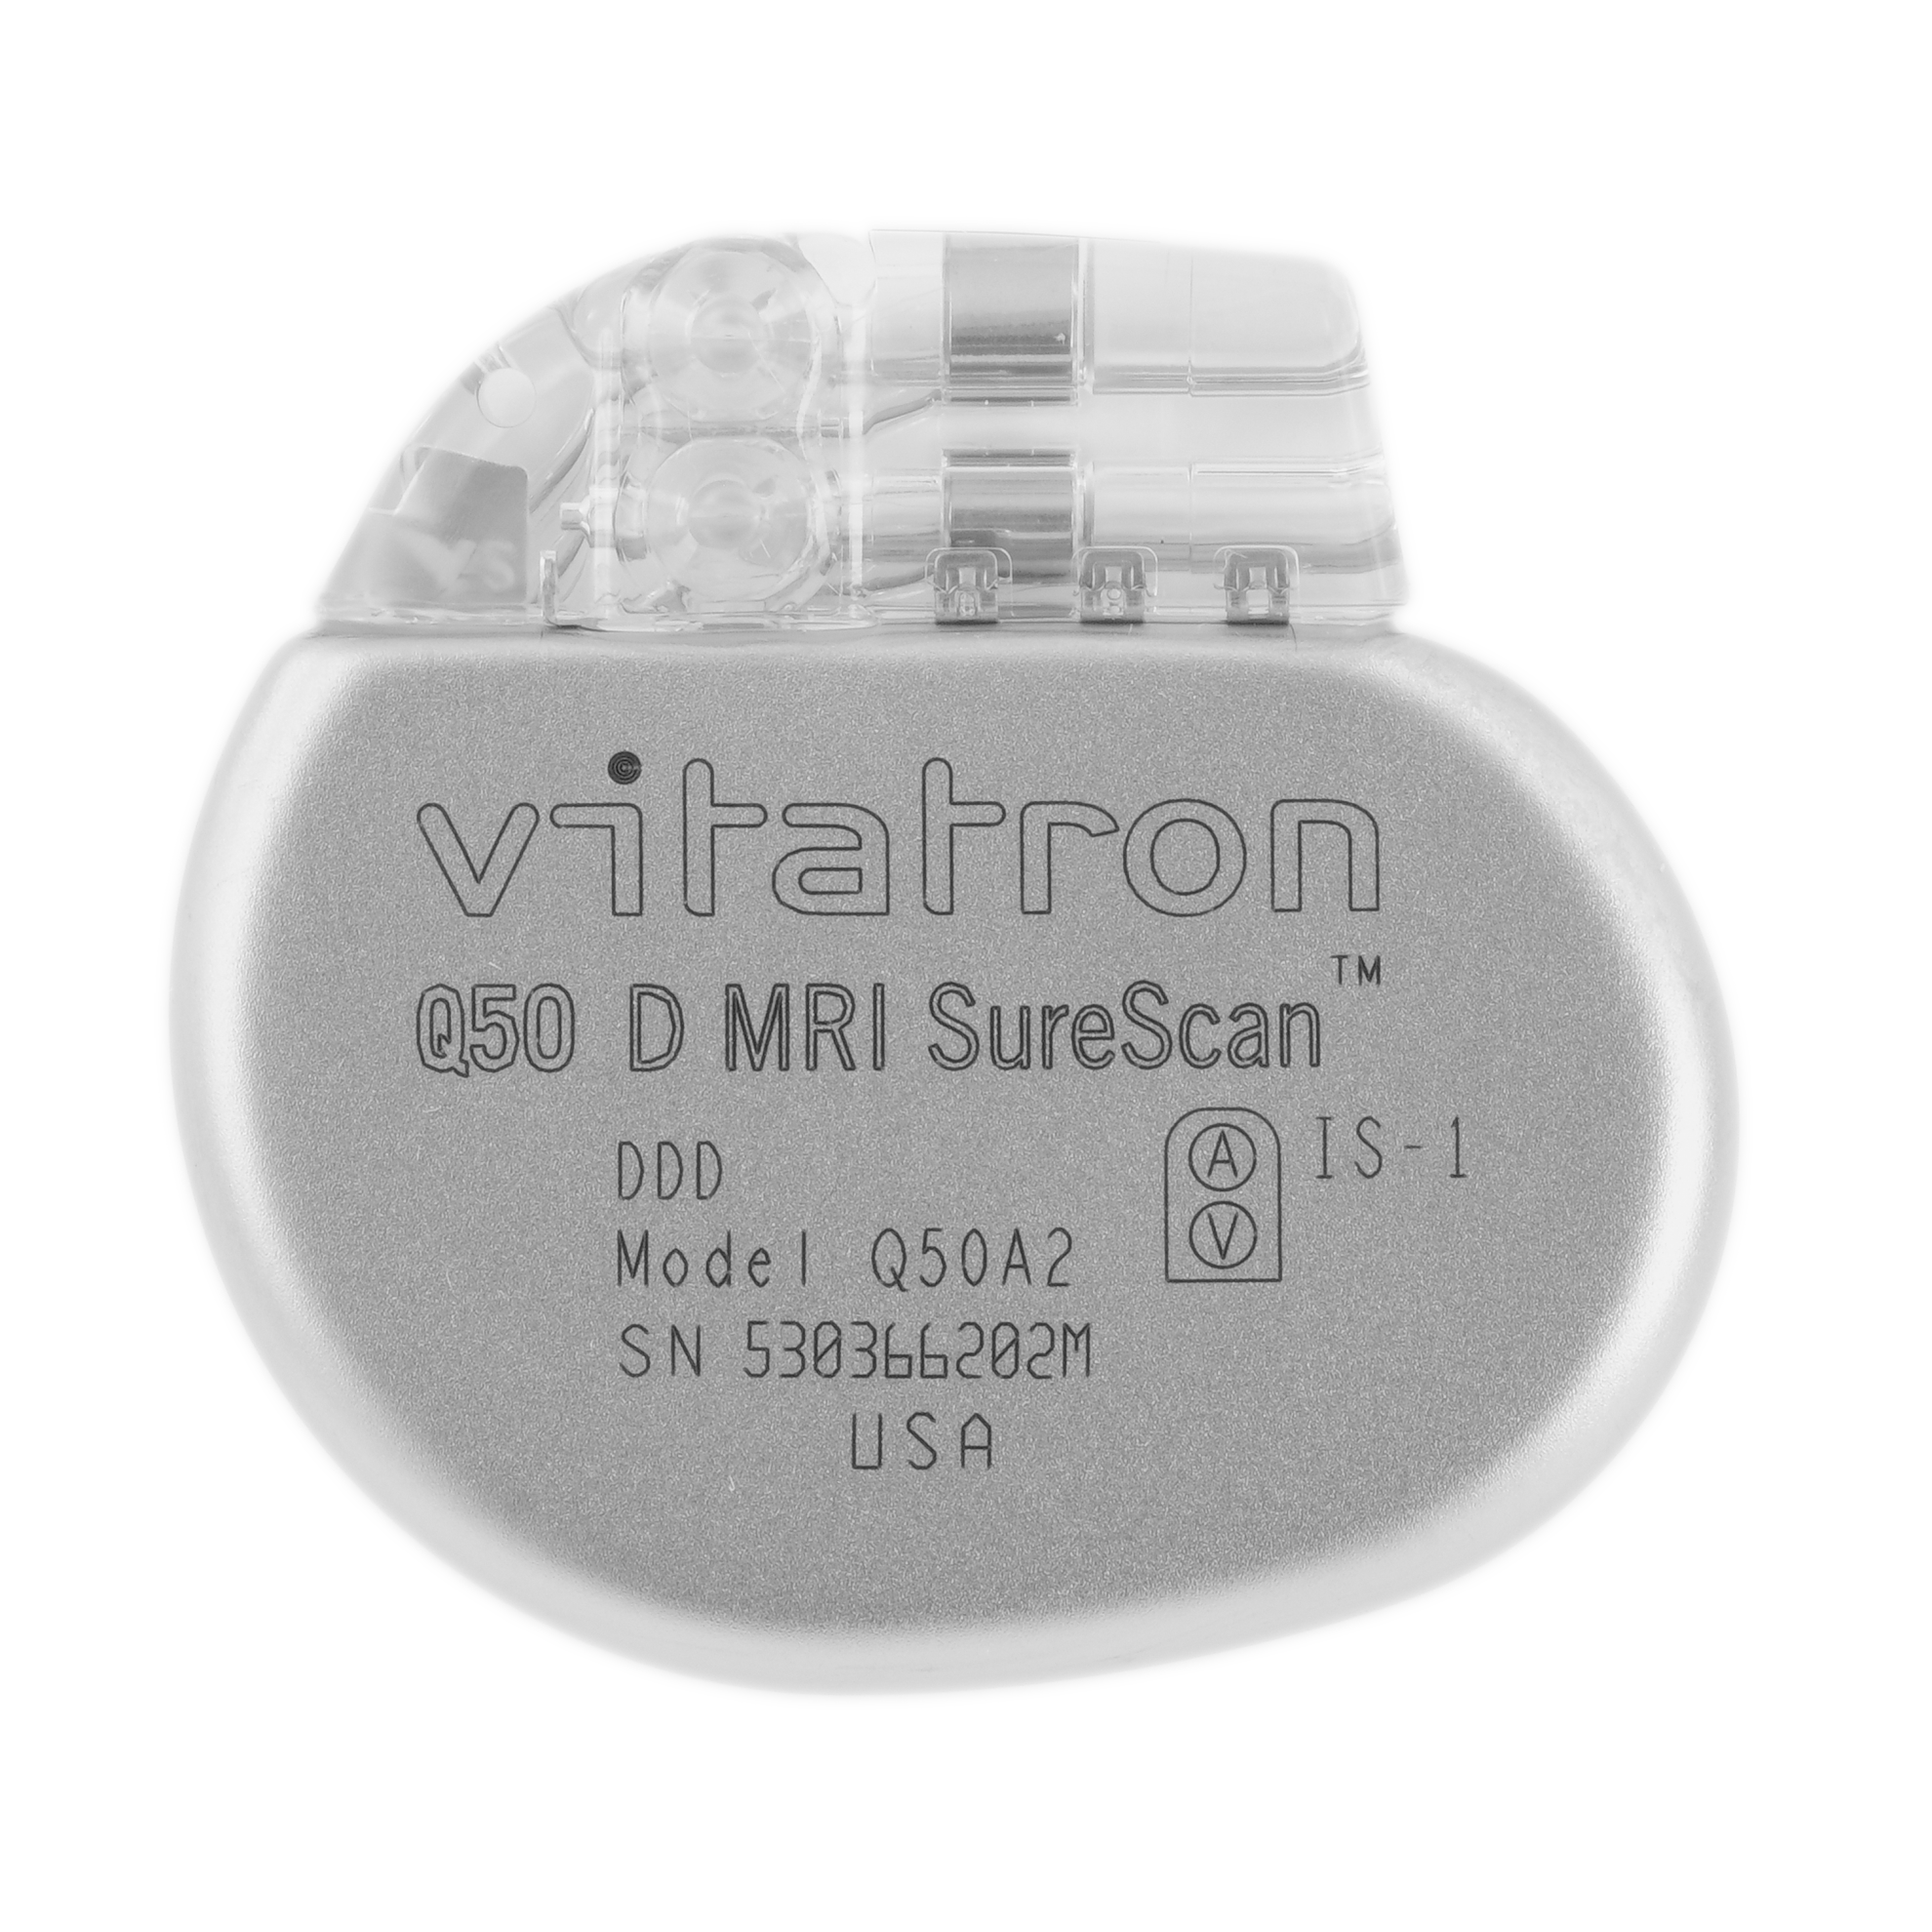 Vitatron Q50 D MRI SureScan